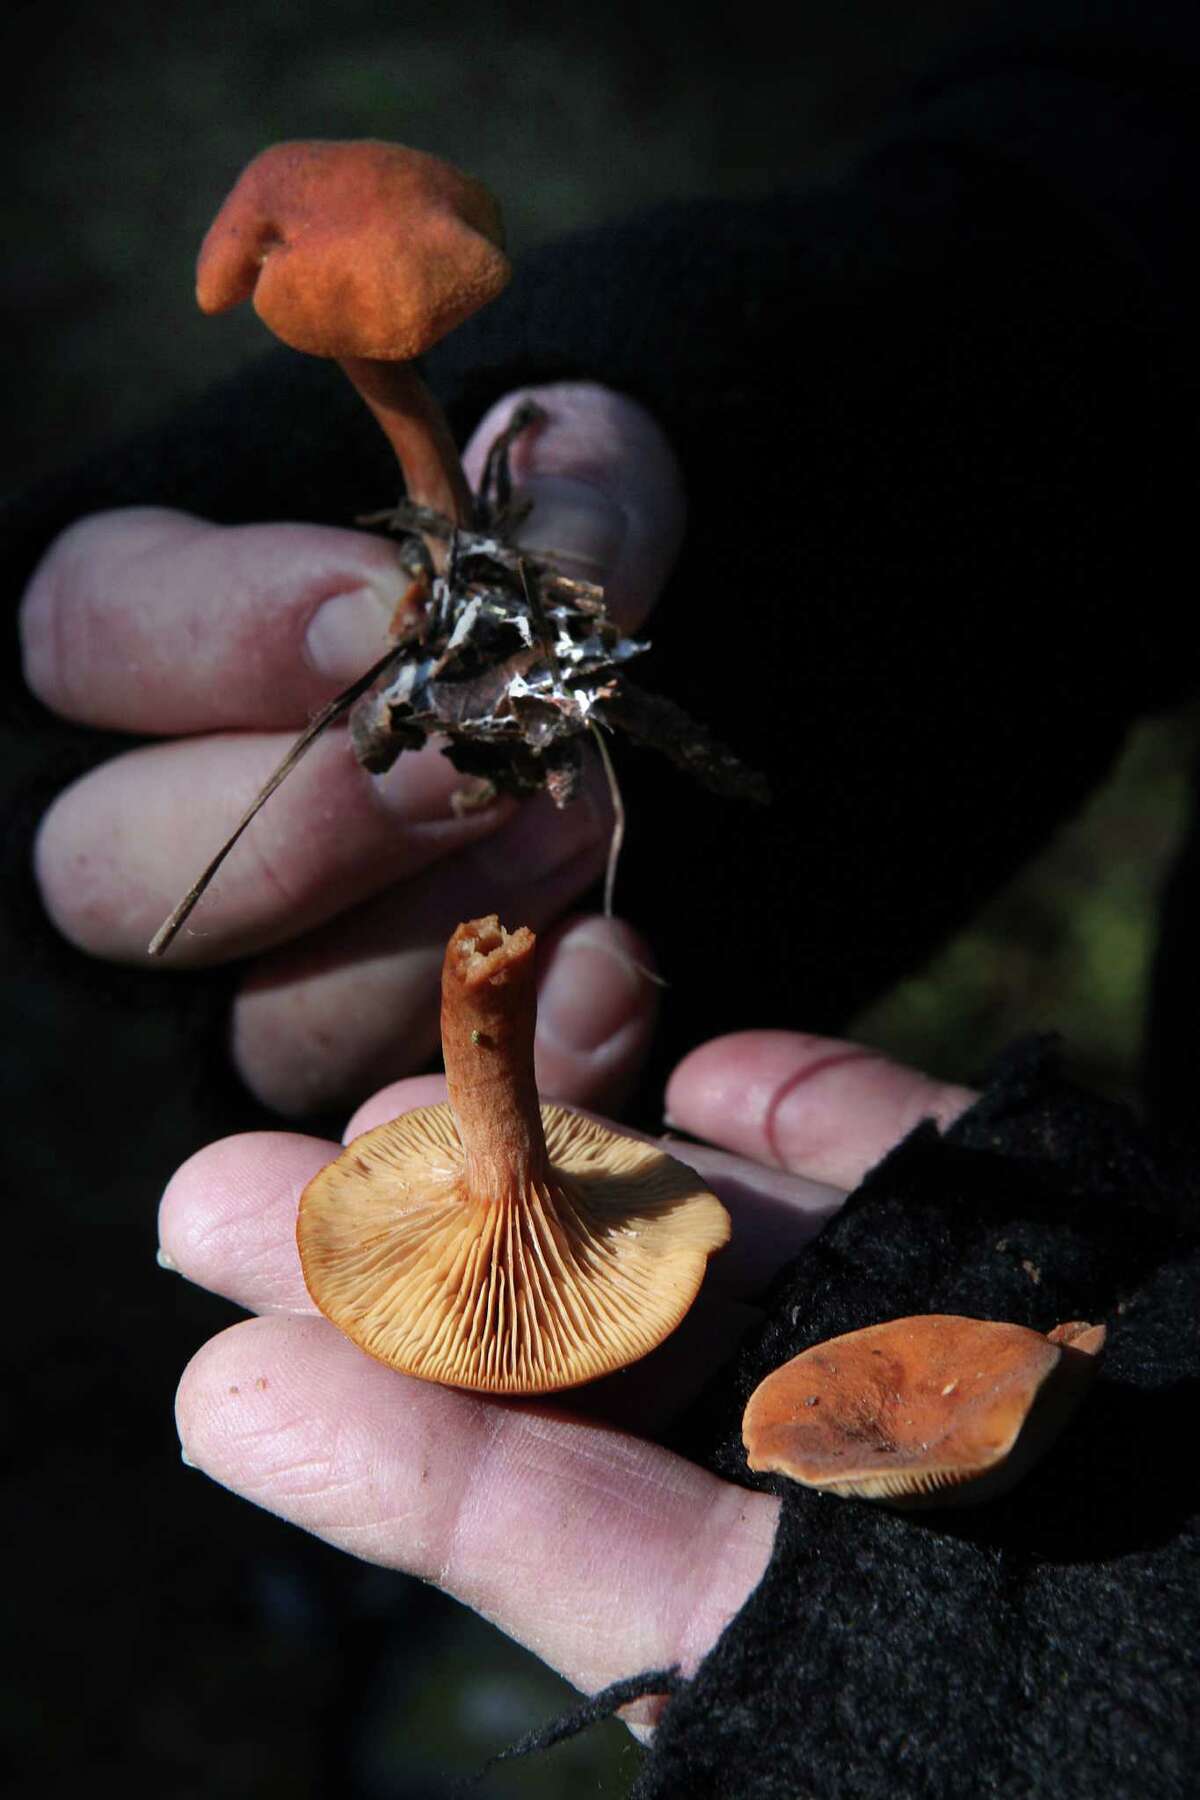 Mushroom maven David Rust shows a candy cap mushroom discovered at Joaquin Miller Park in Oakland.